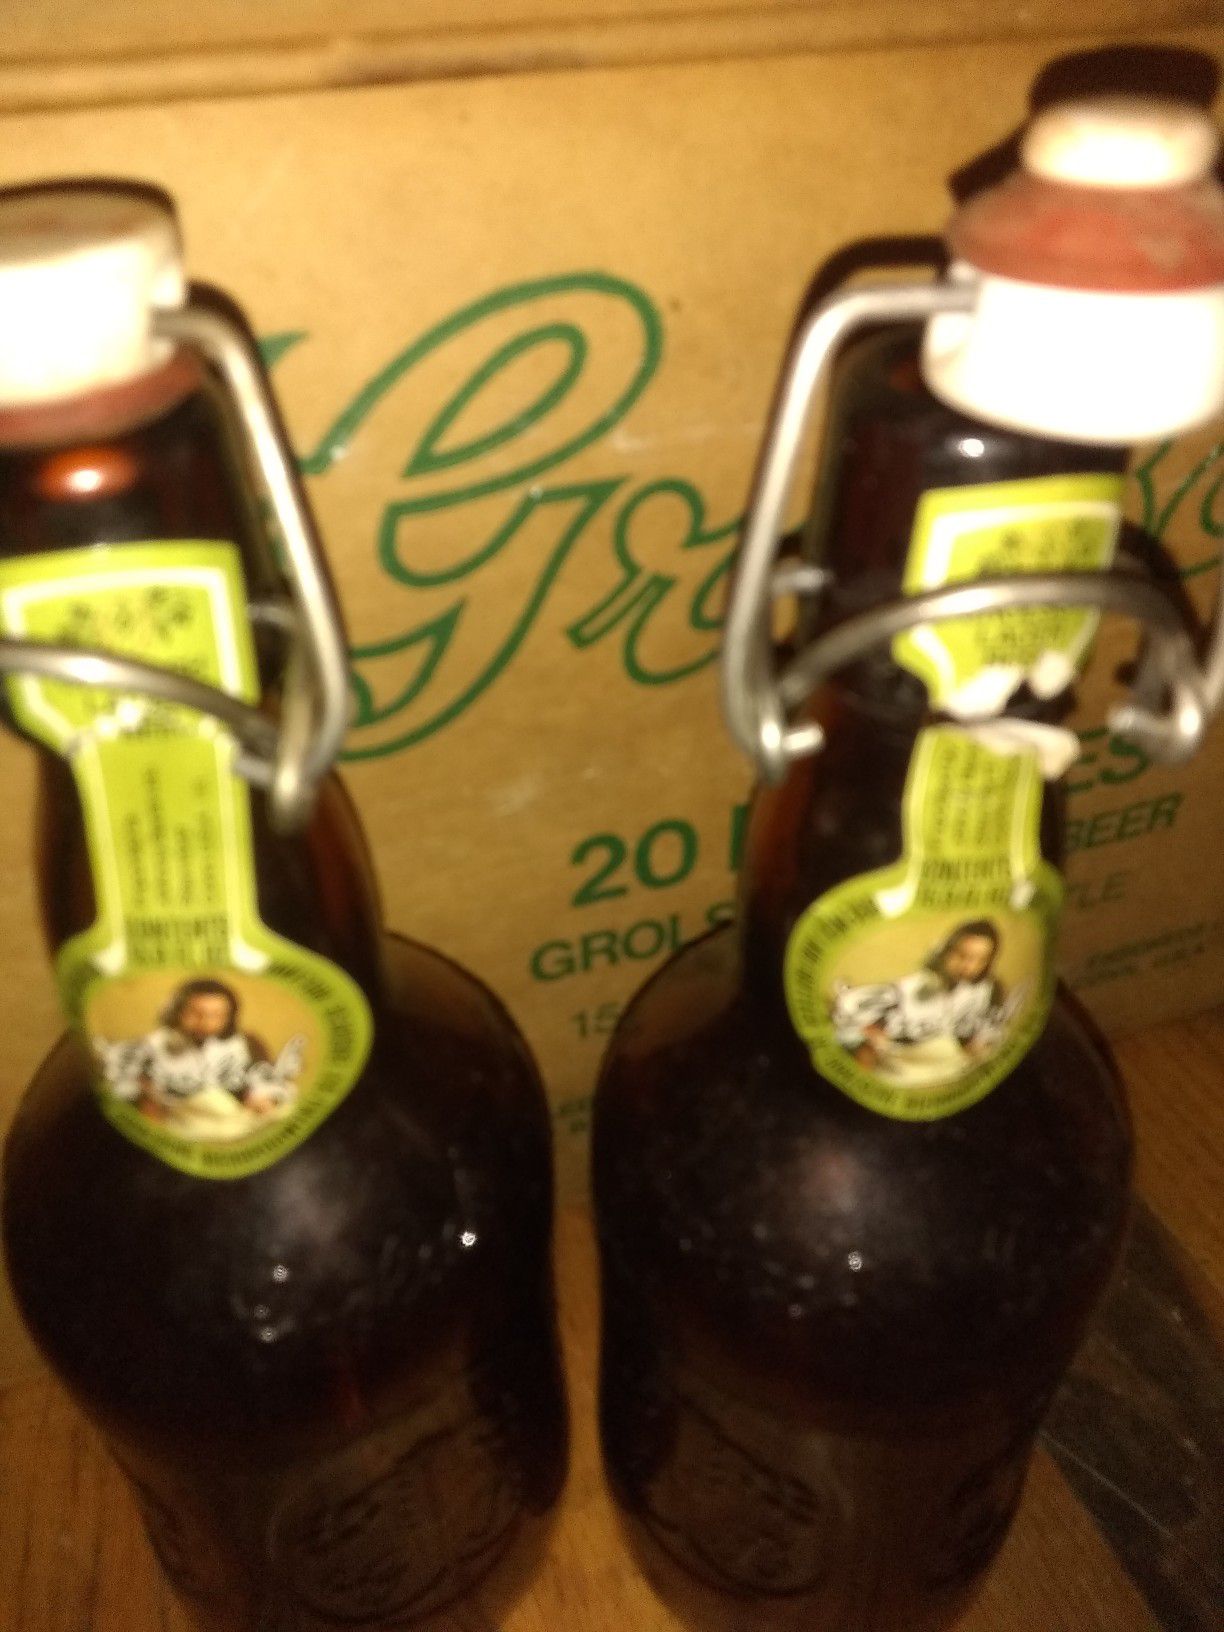 Grolasch lager beer bottles, box of 19